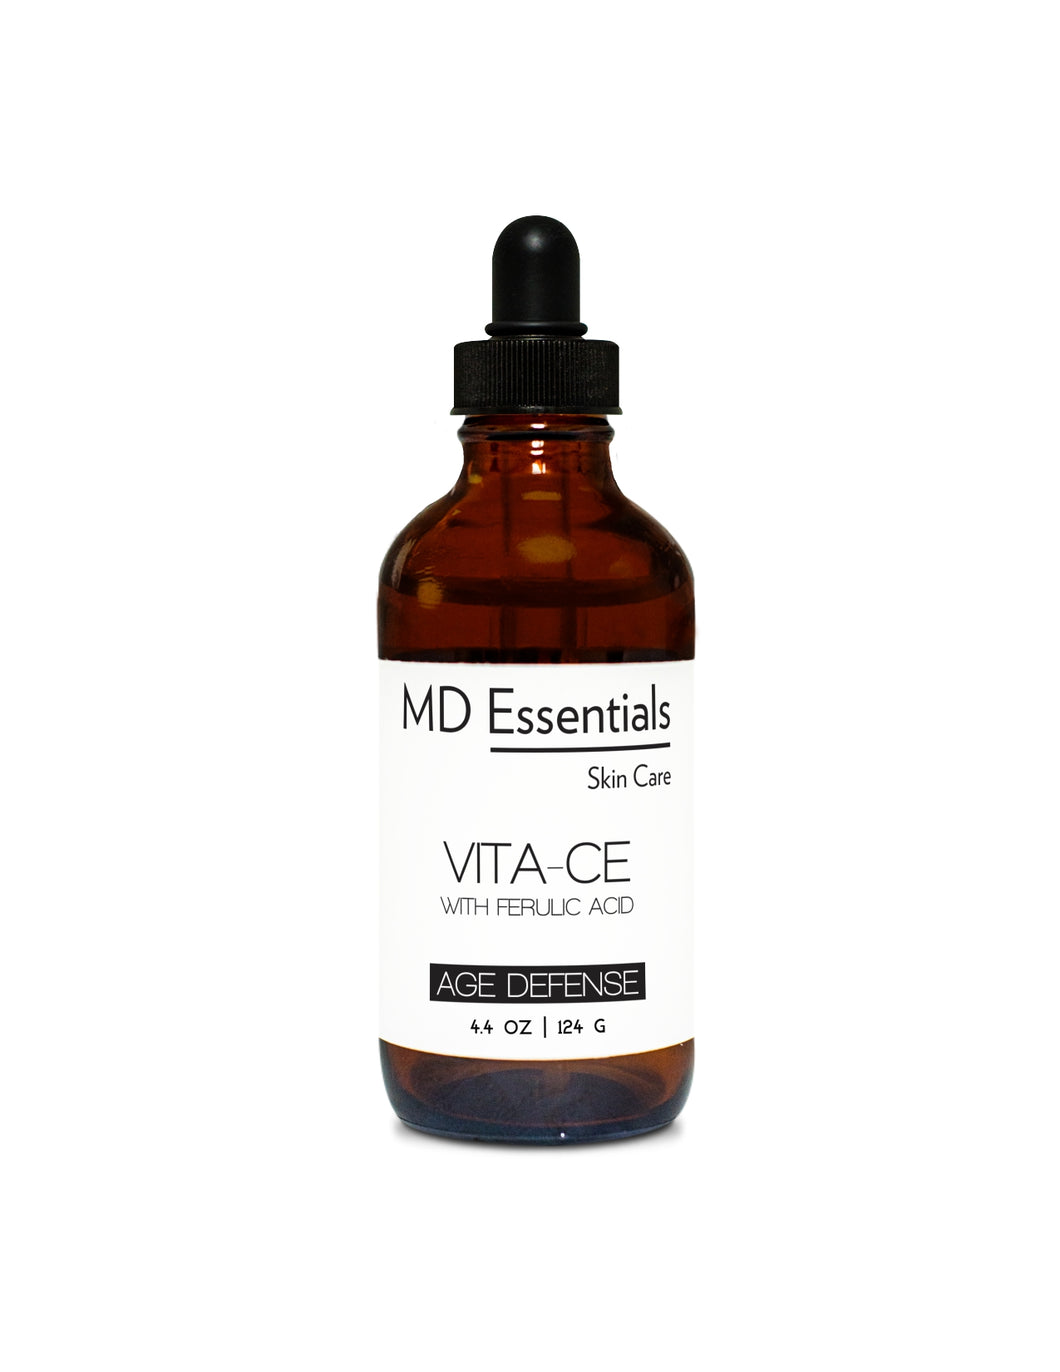 Vita CE with Ferulic Acid